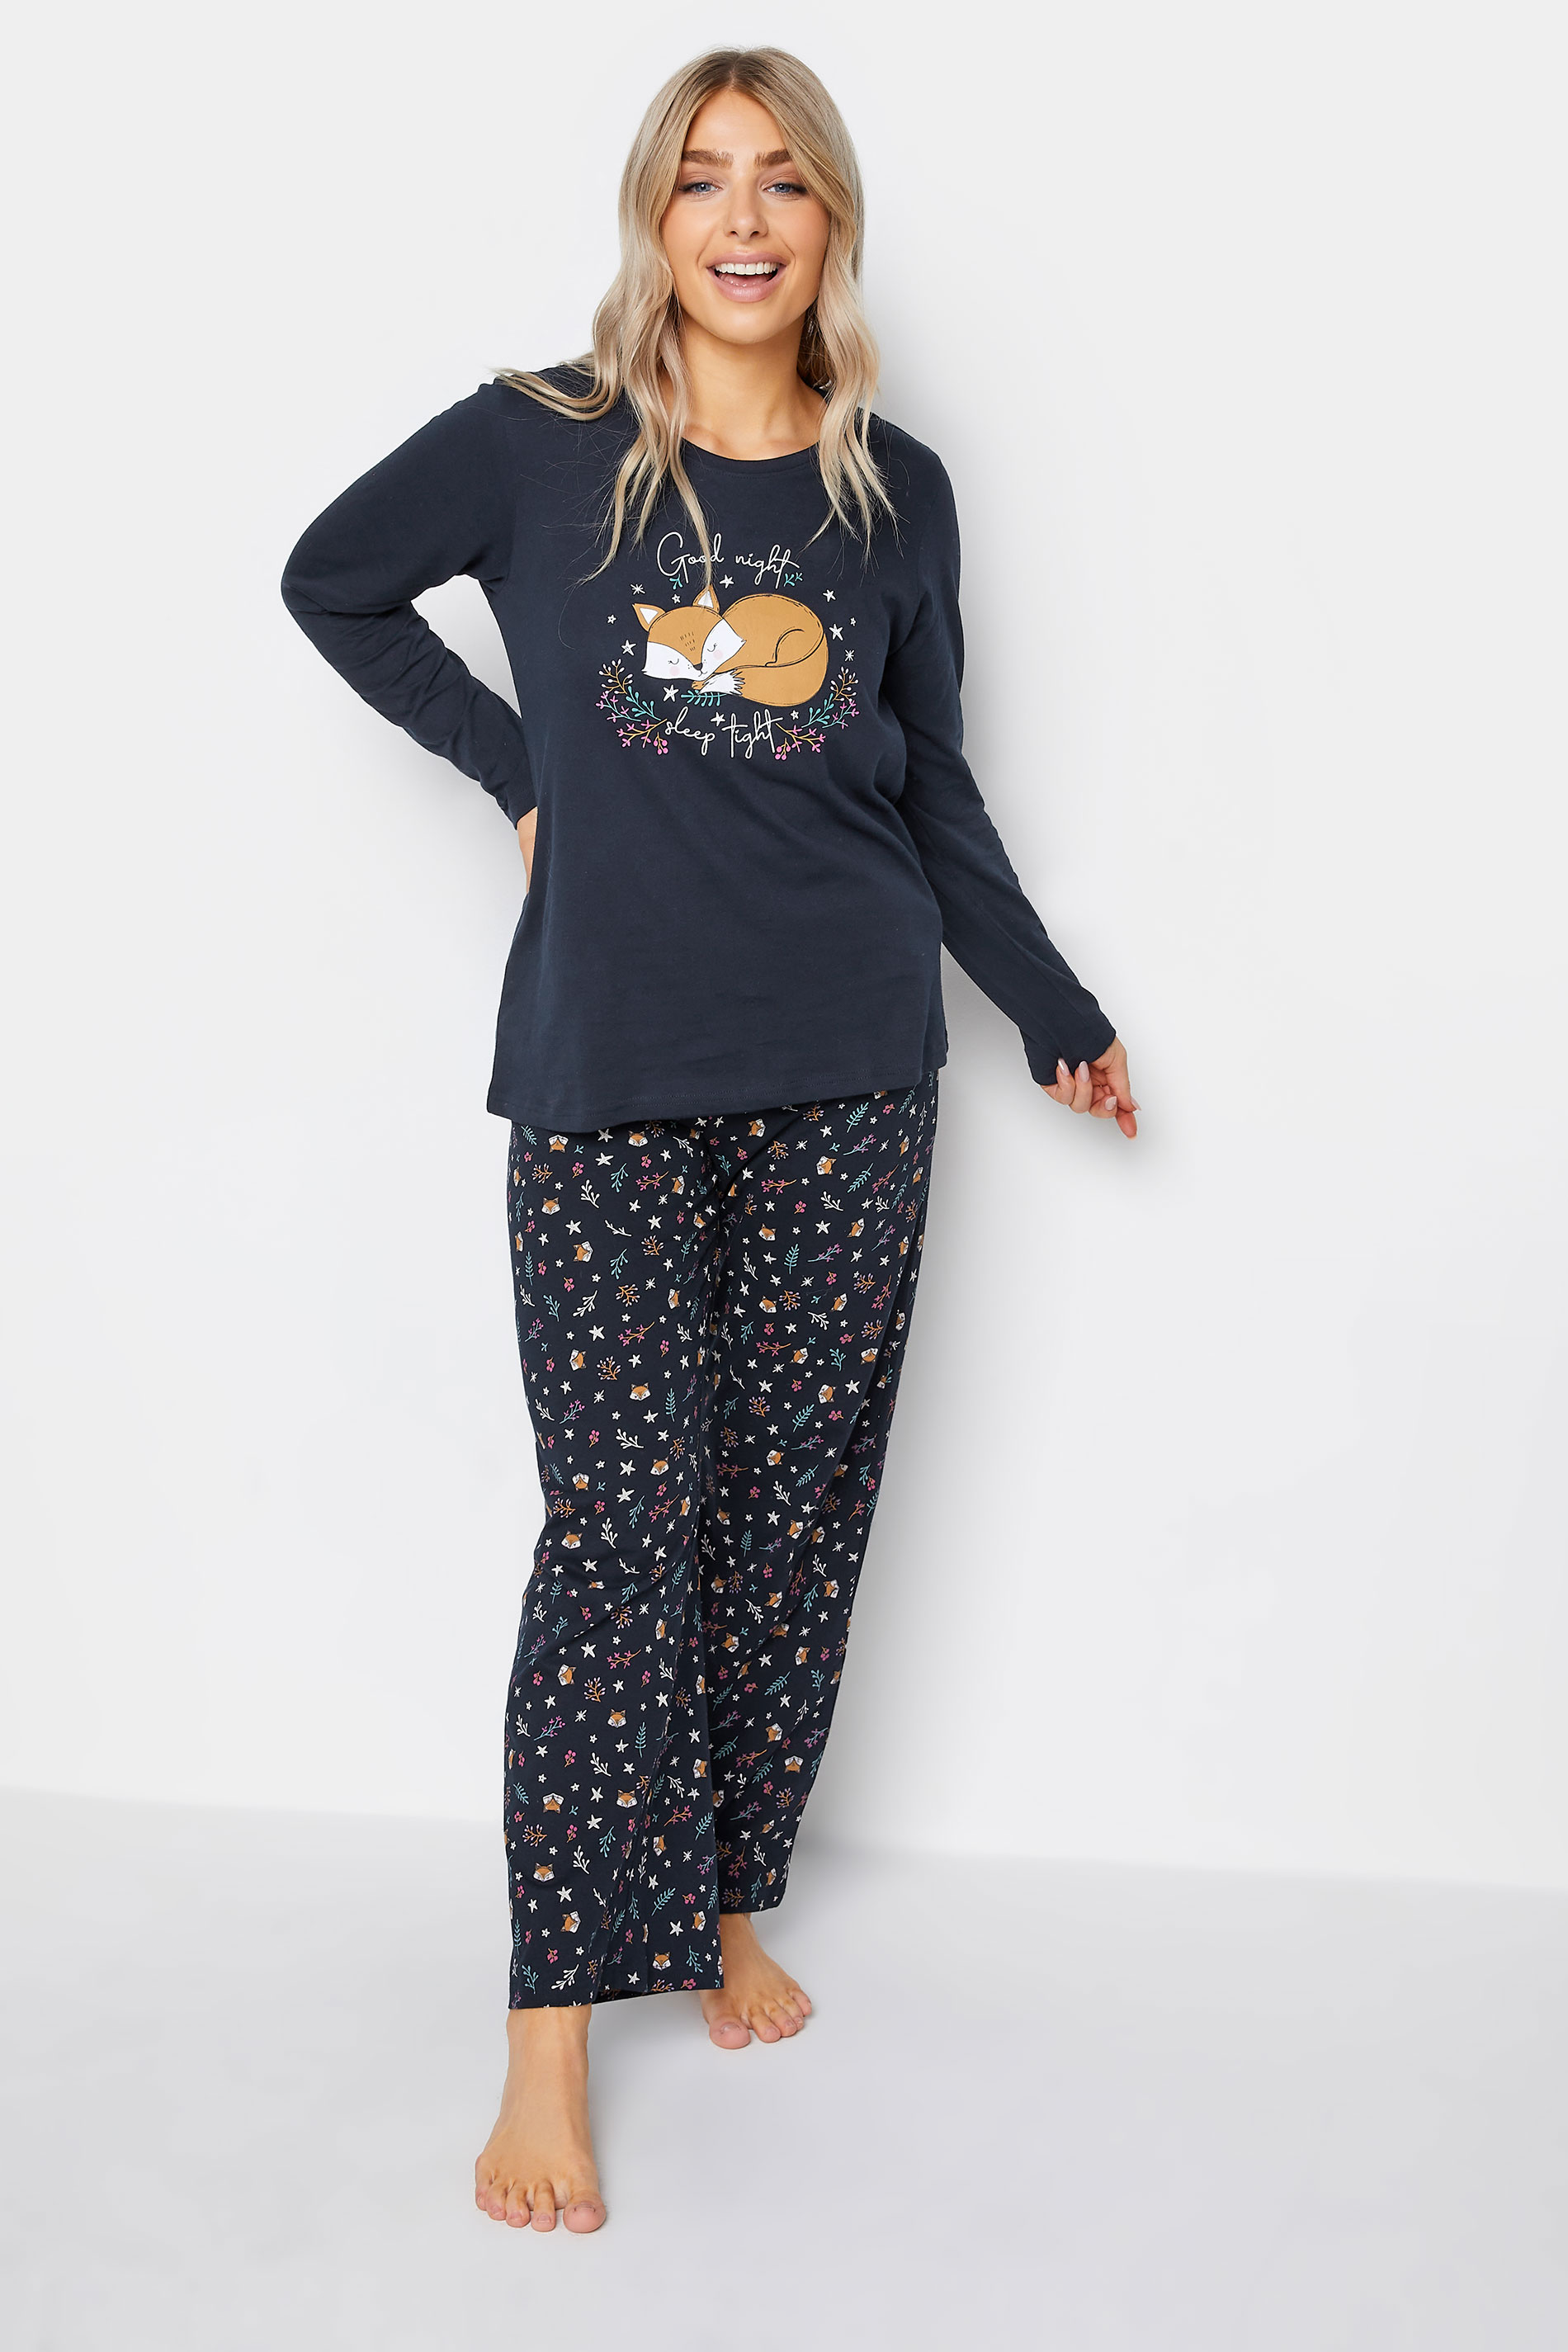 M&Co Navy Blue Cotton 'Good Night' Fox Print Wide Leg Pyjama Set | M&Co 3